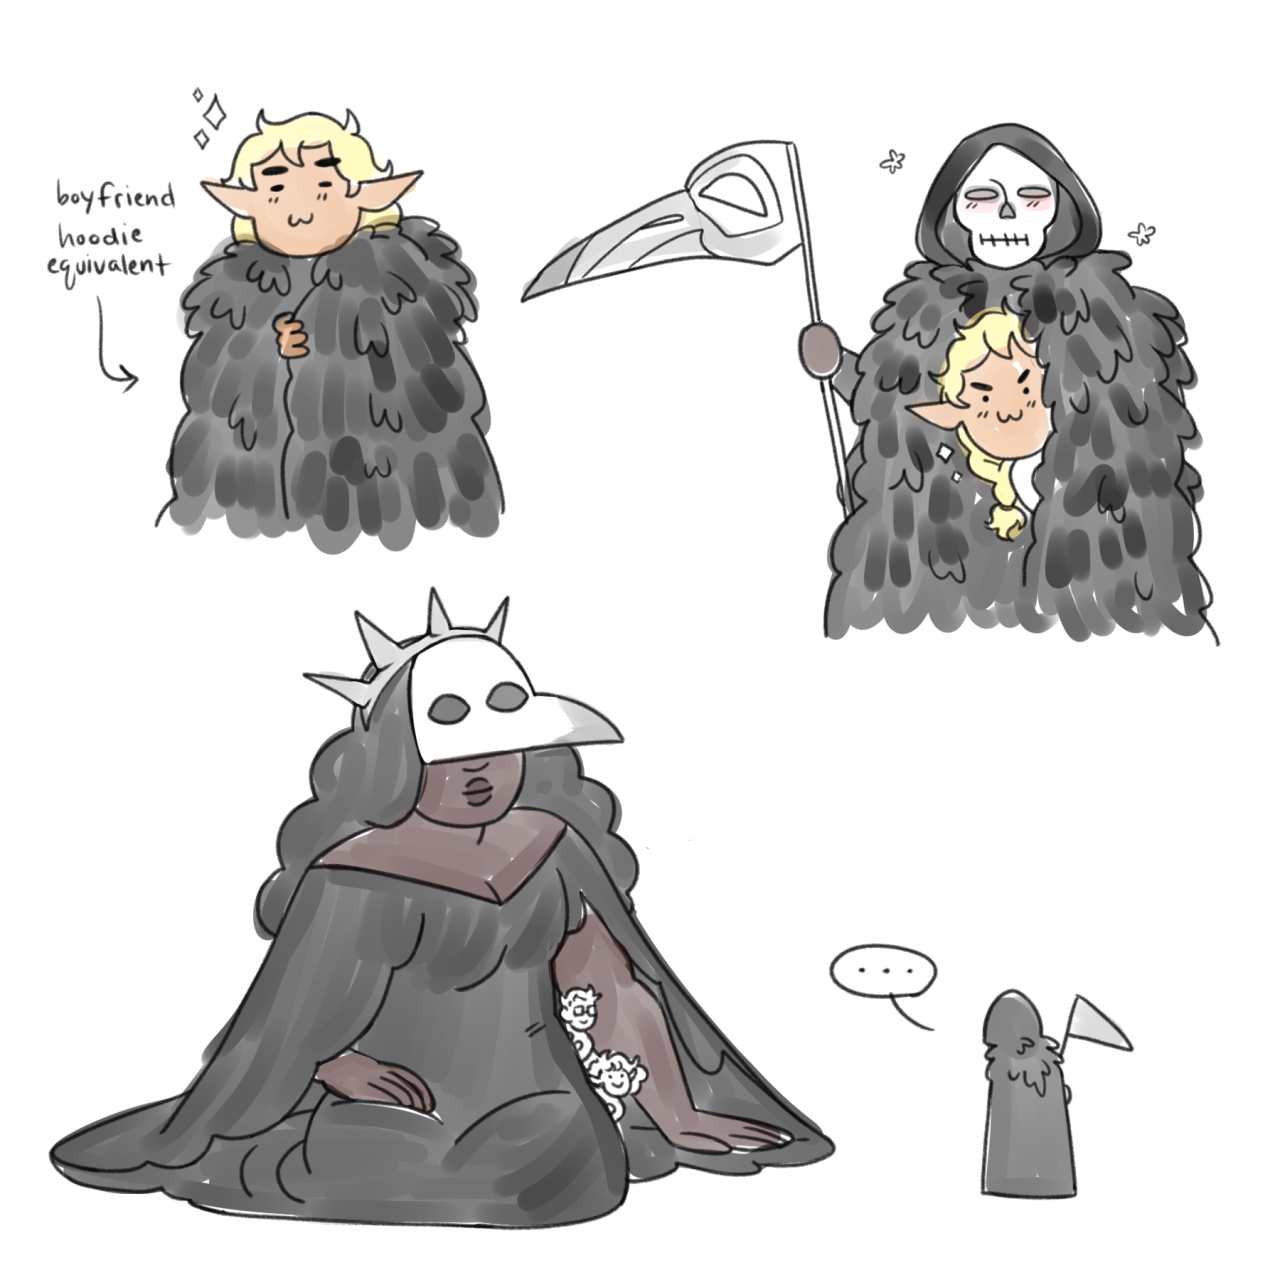 herbgerblin:[id: three doodles. Top left is Taako, an elven man wearing a dark, feathered